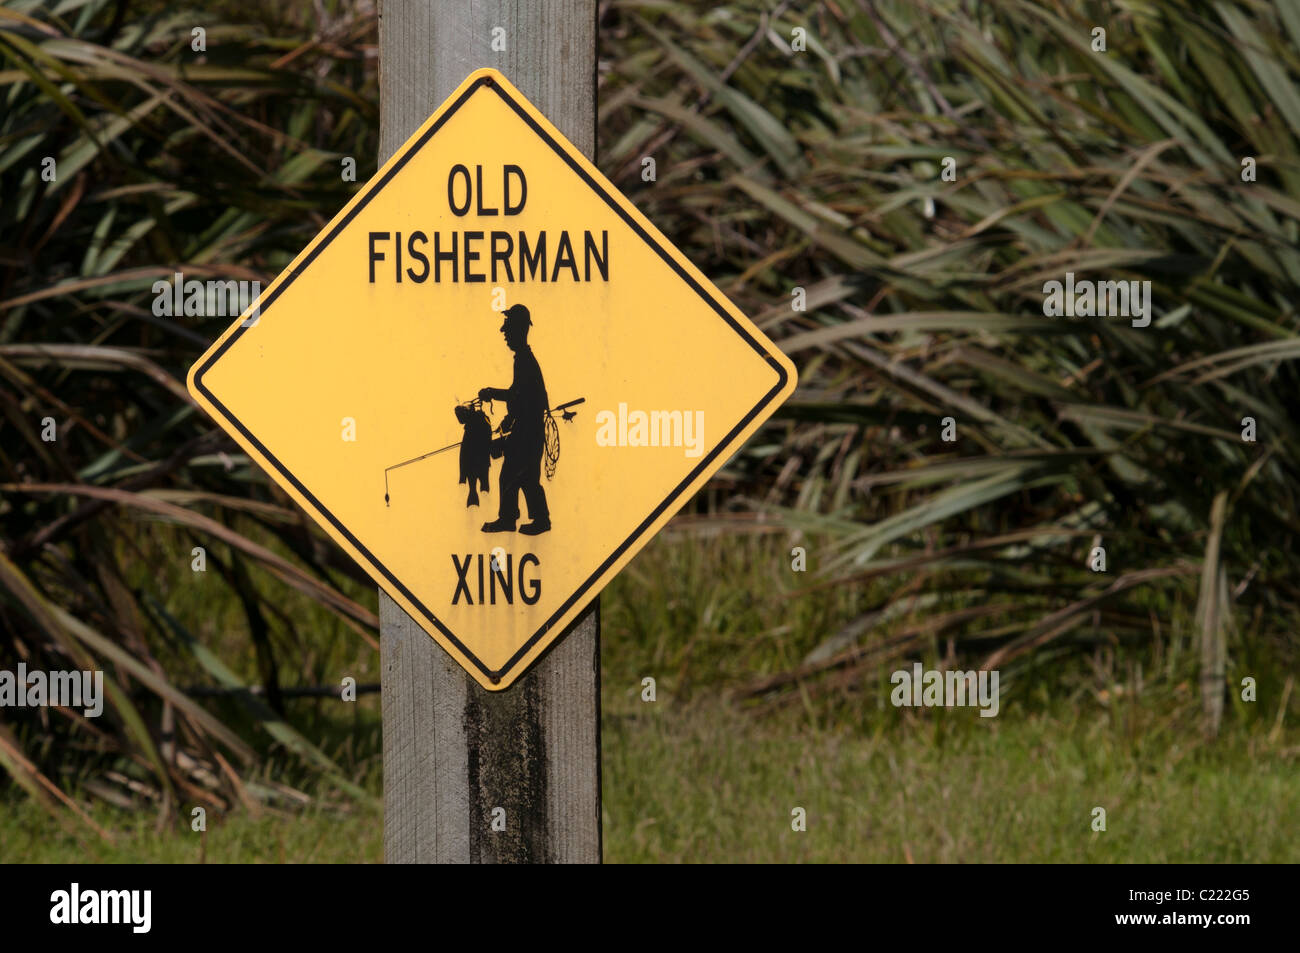 Be carefull - old fishermen might cross the road !  Achtung! Ältere Fischer könnten unterwegs sein! Stock Photo